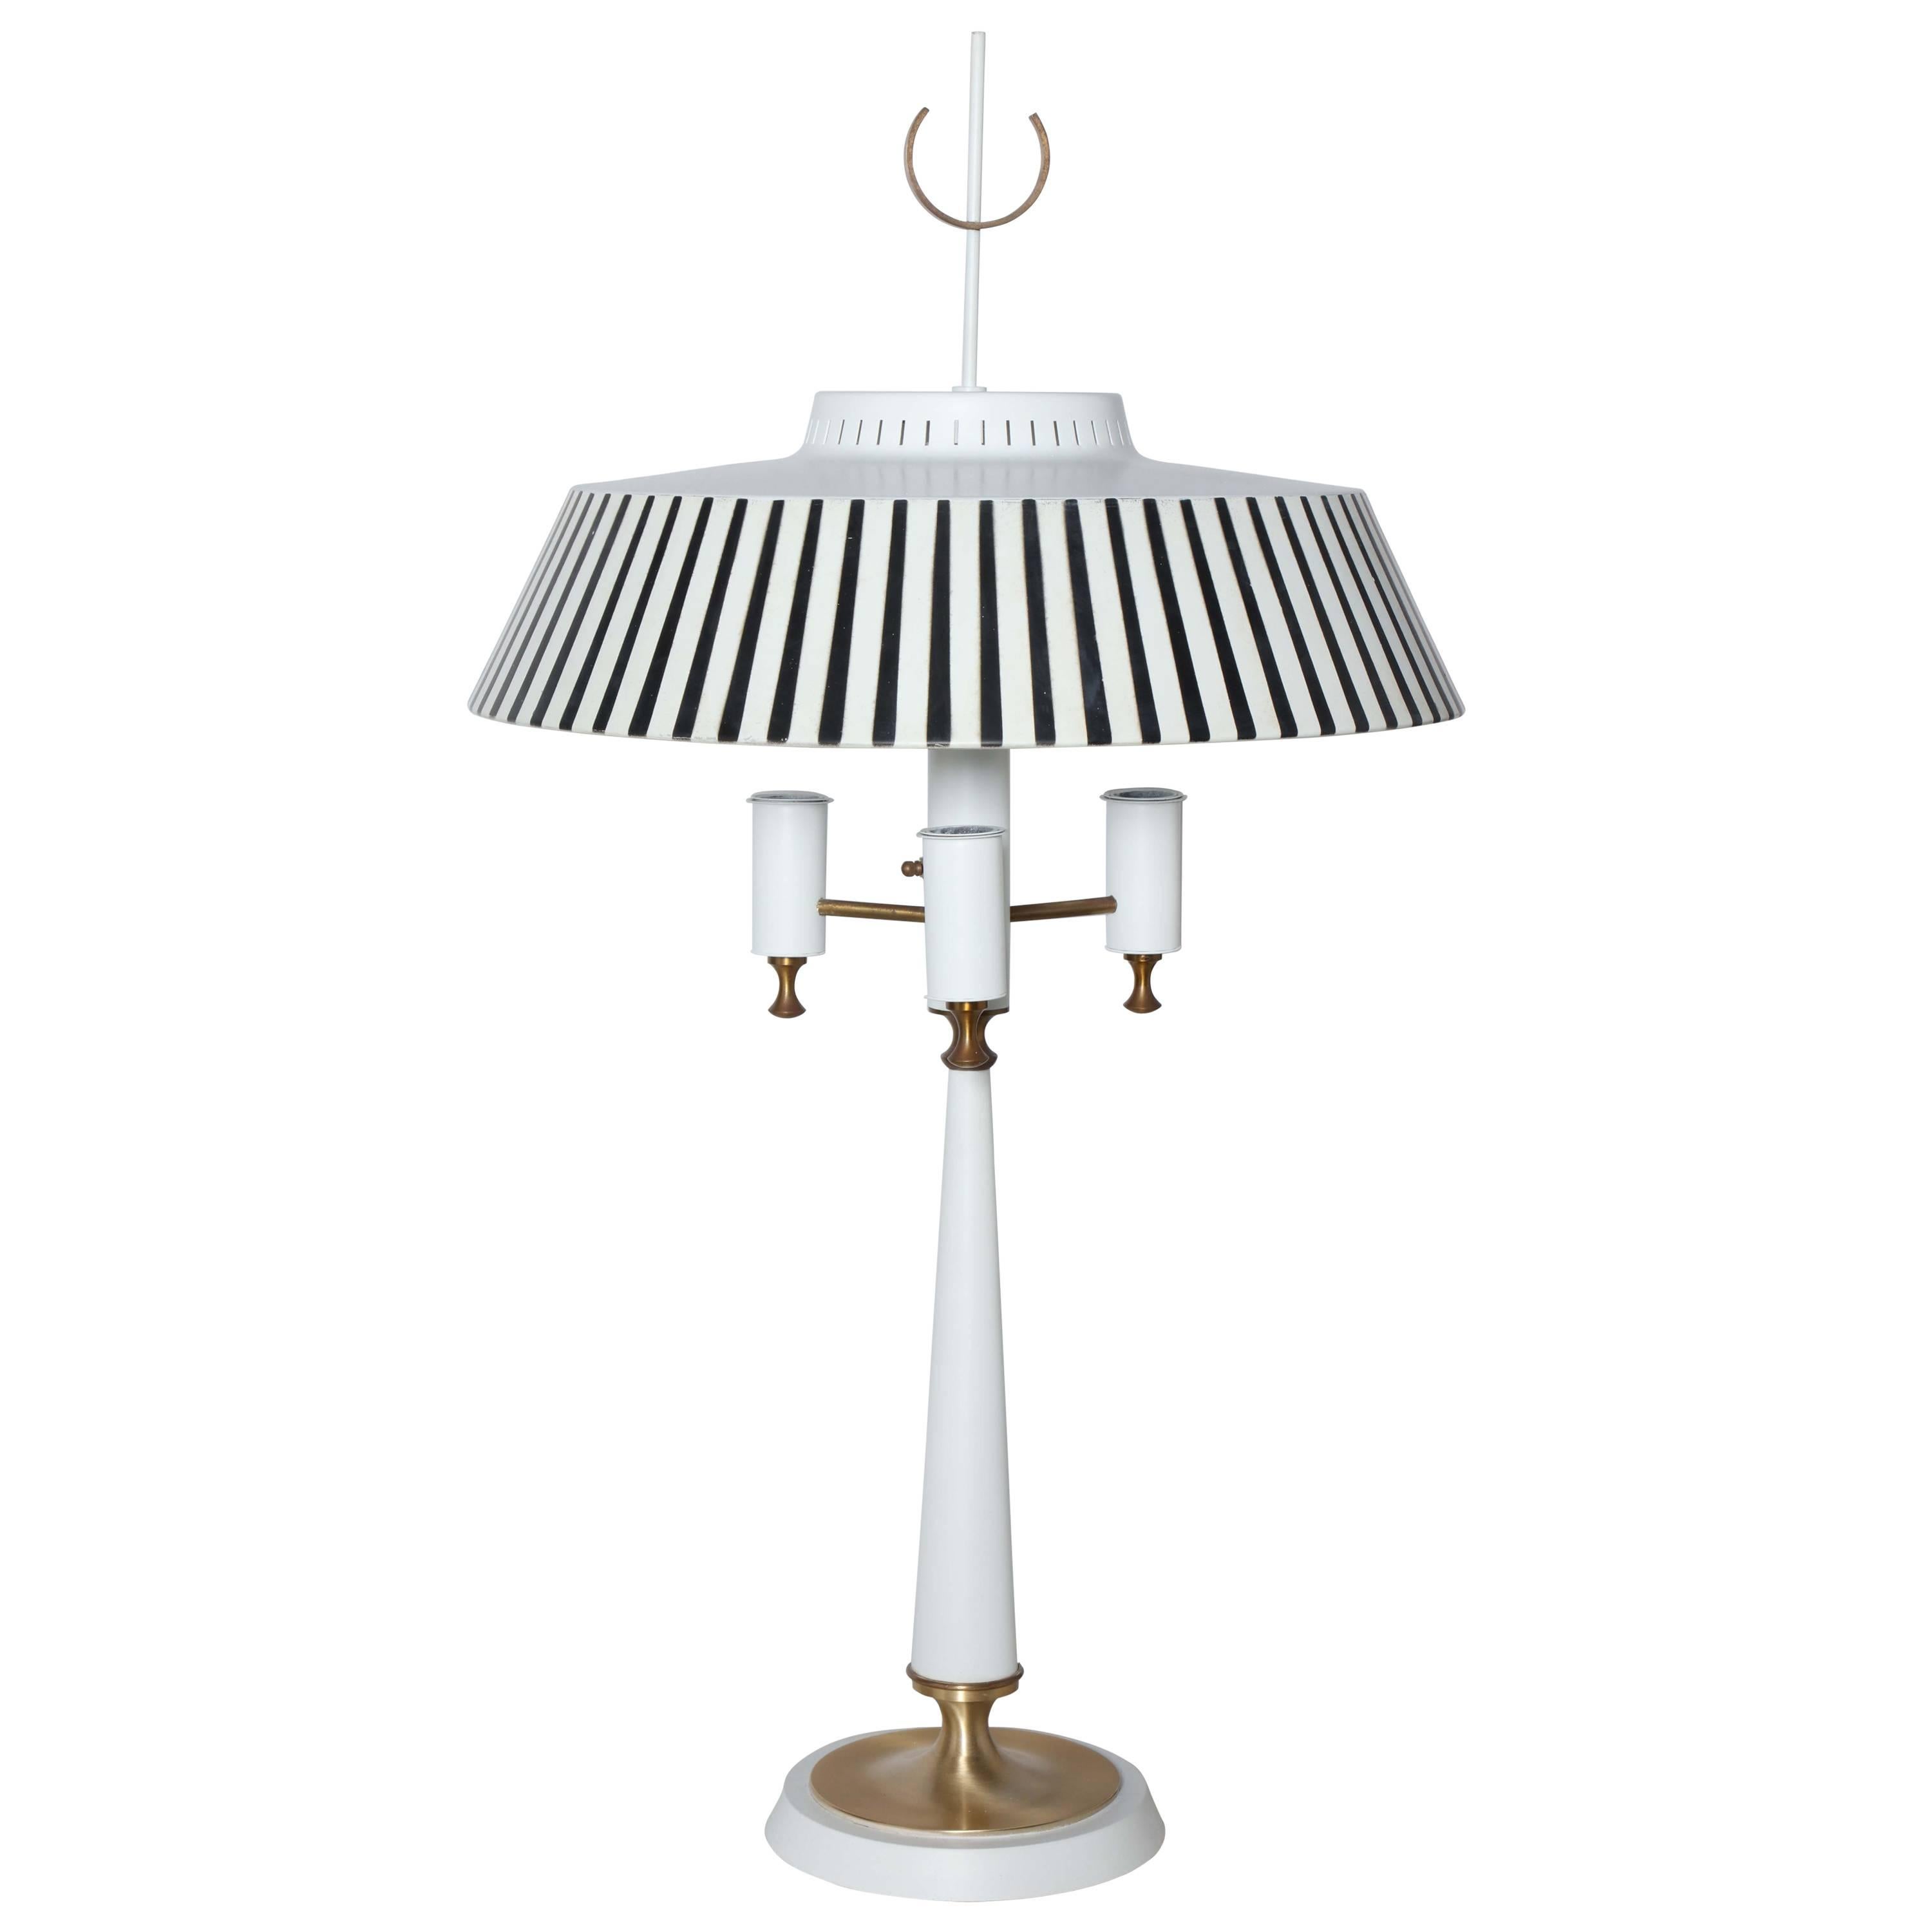 Gerald Thurston White Candlestick Lamp with Black & White Stripe Metal Shade